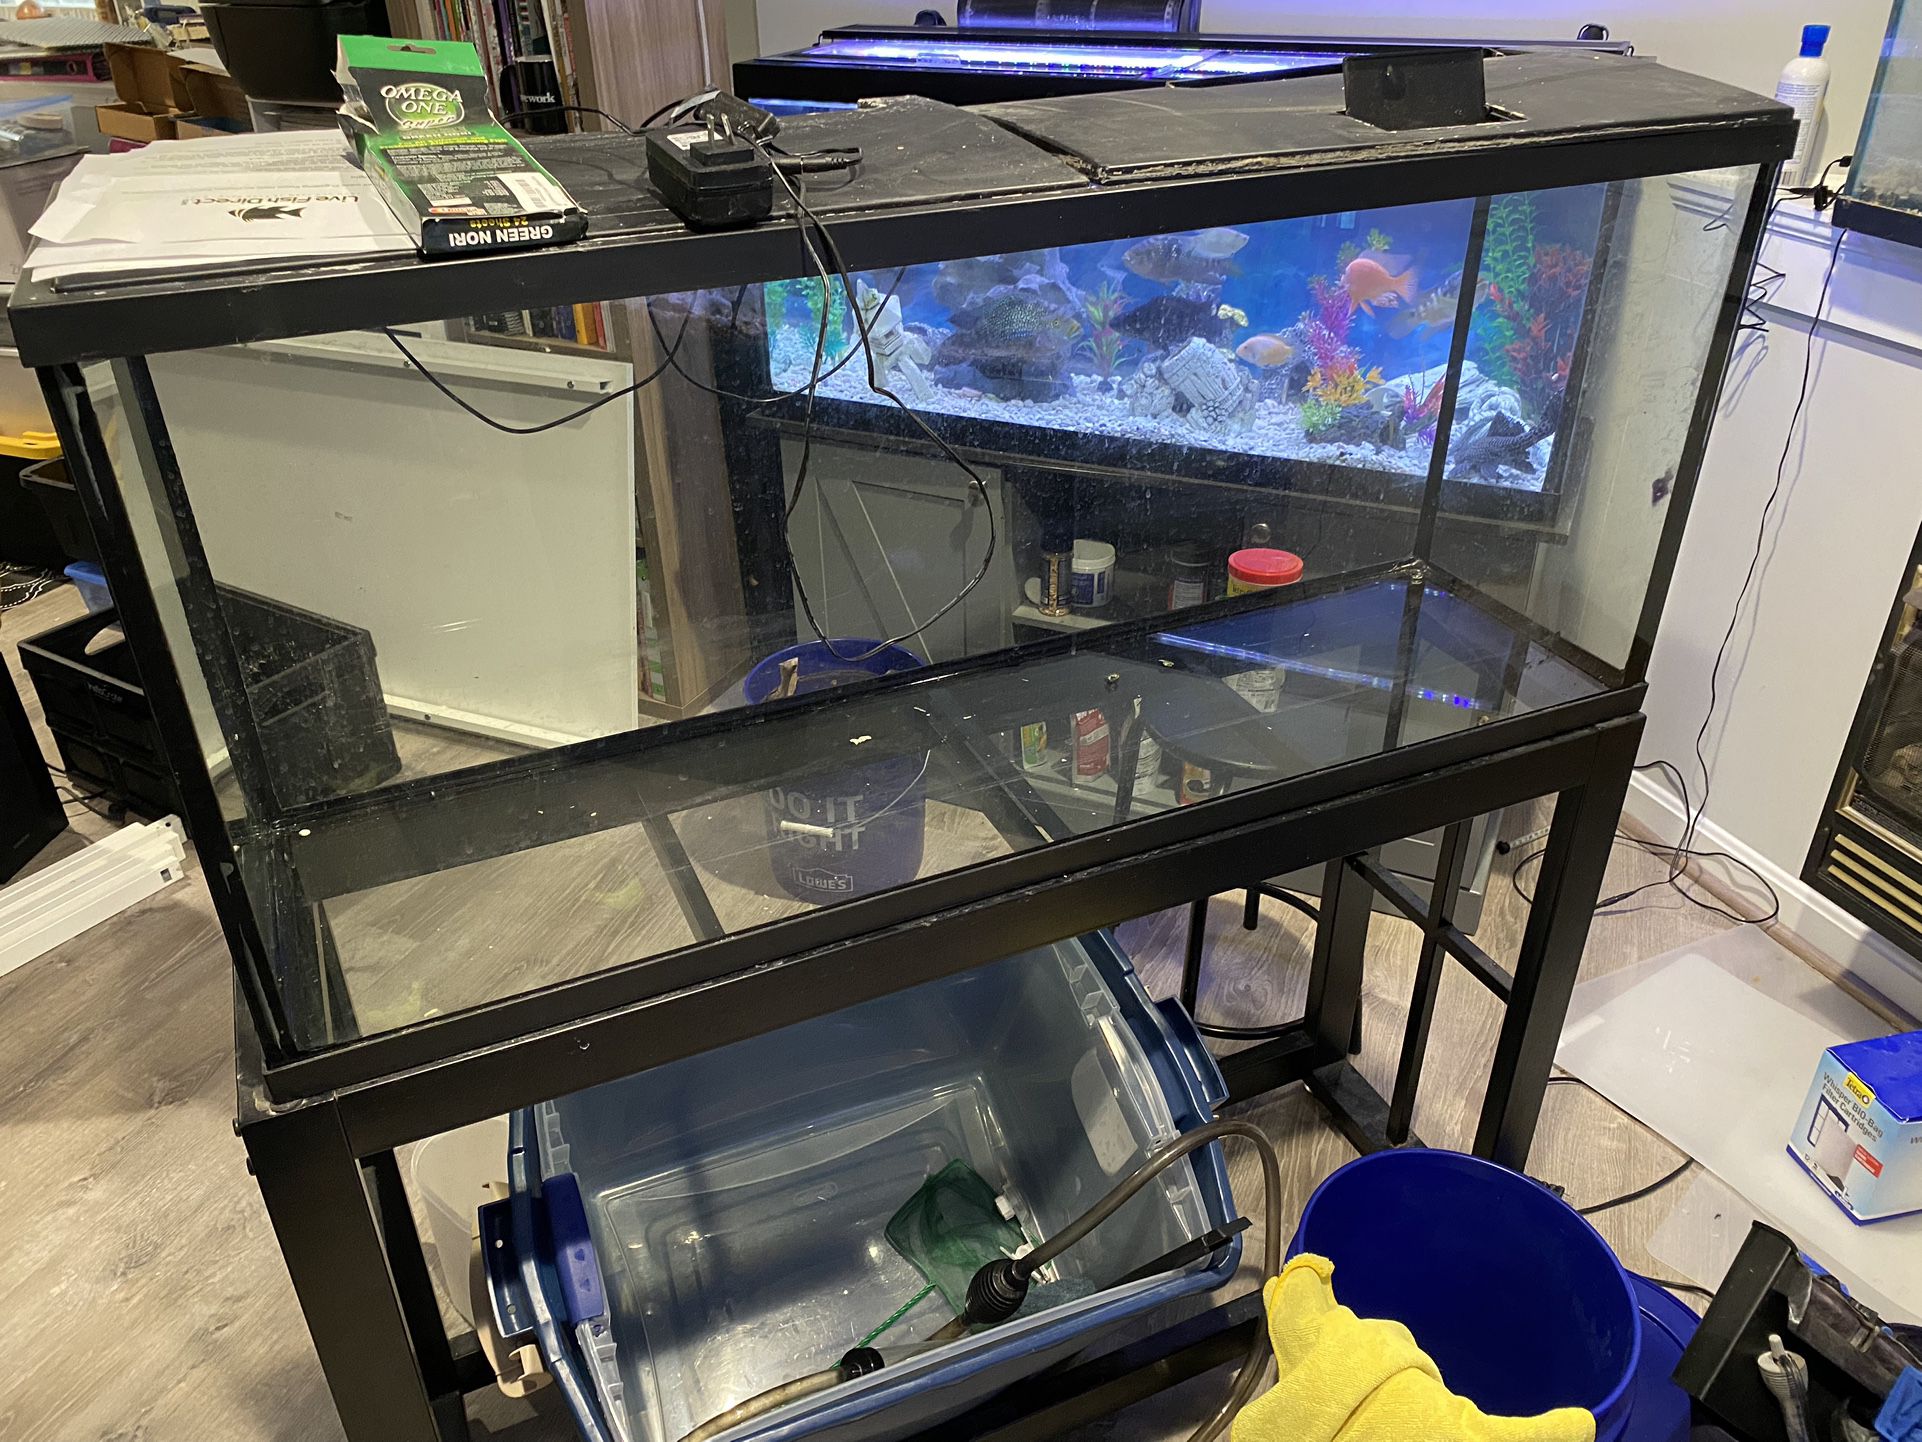 55 Gallon Fish Tank Aquarium With Stand